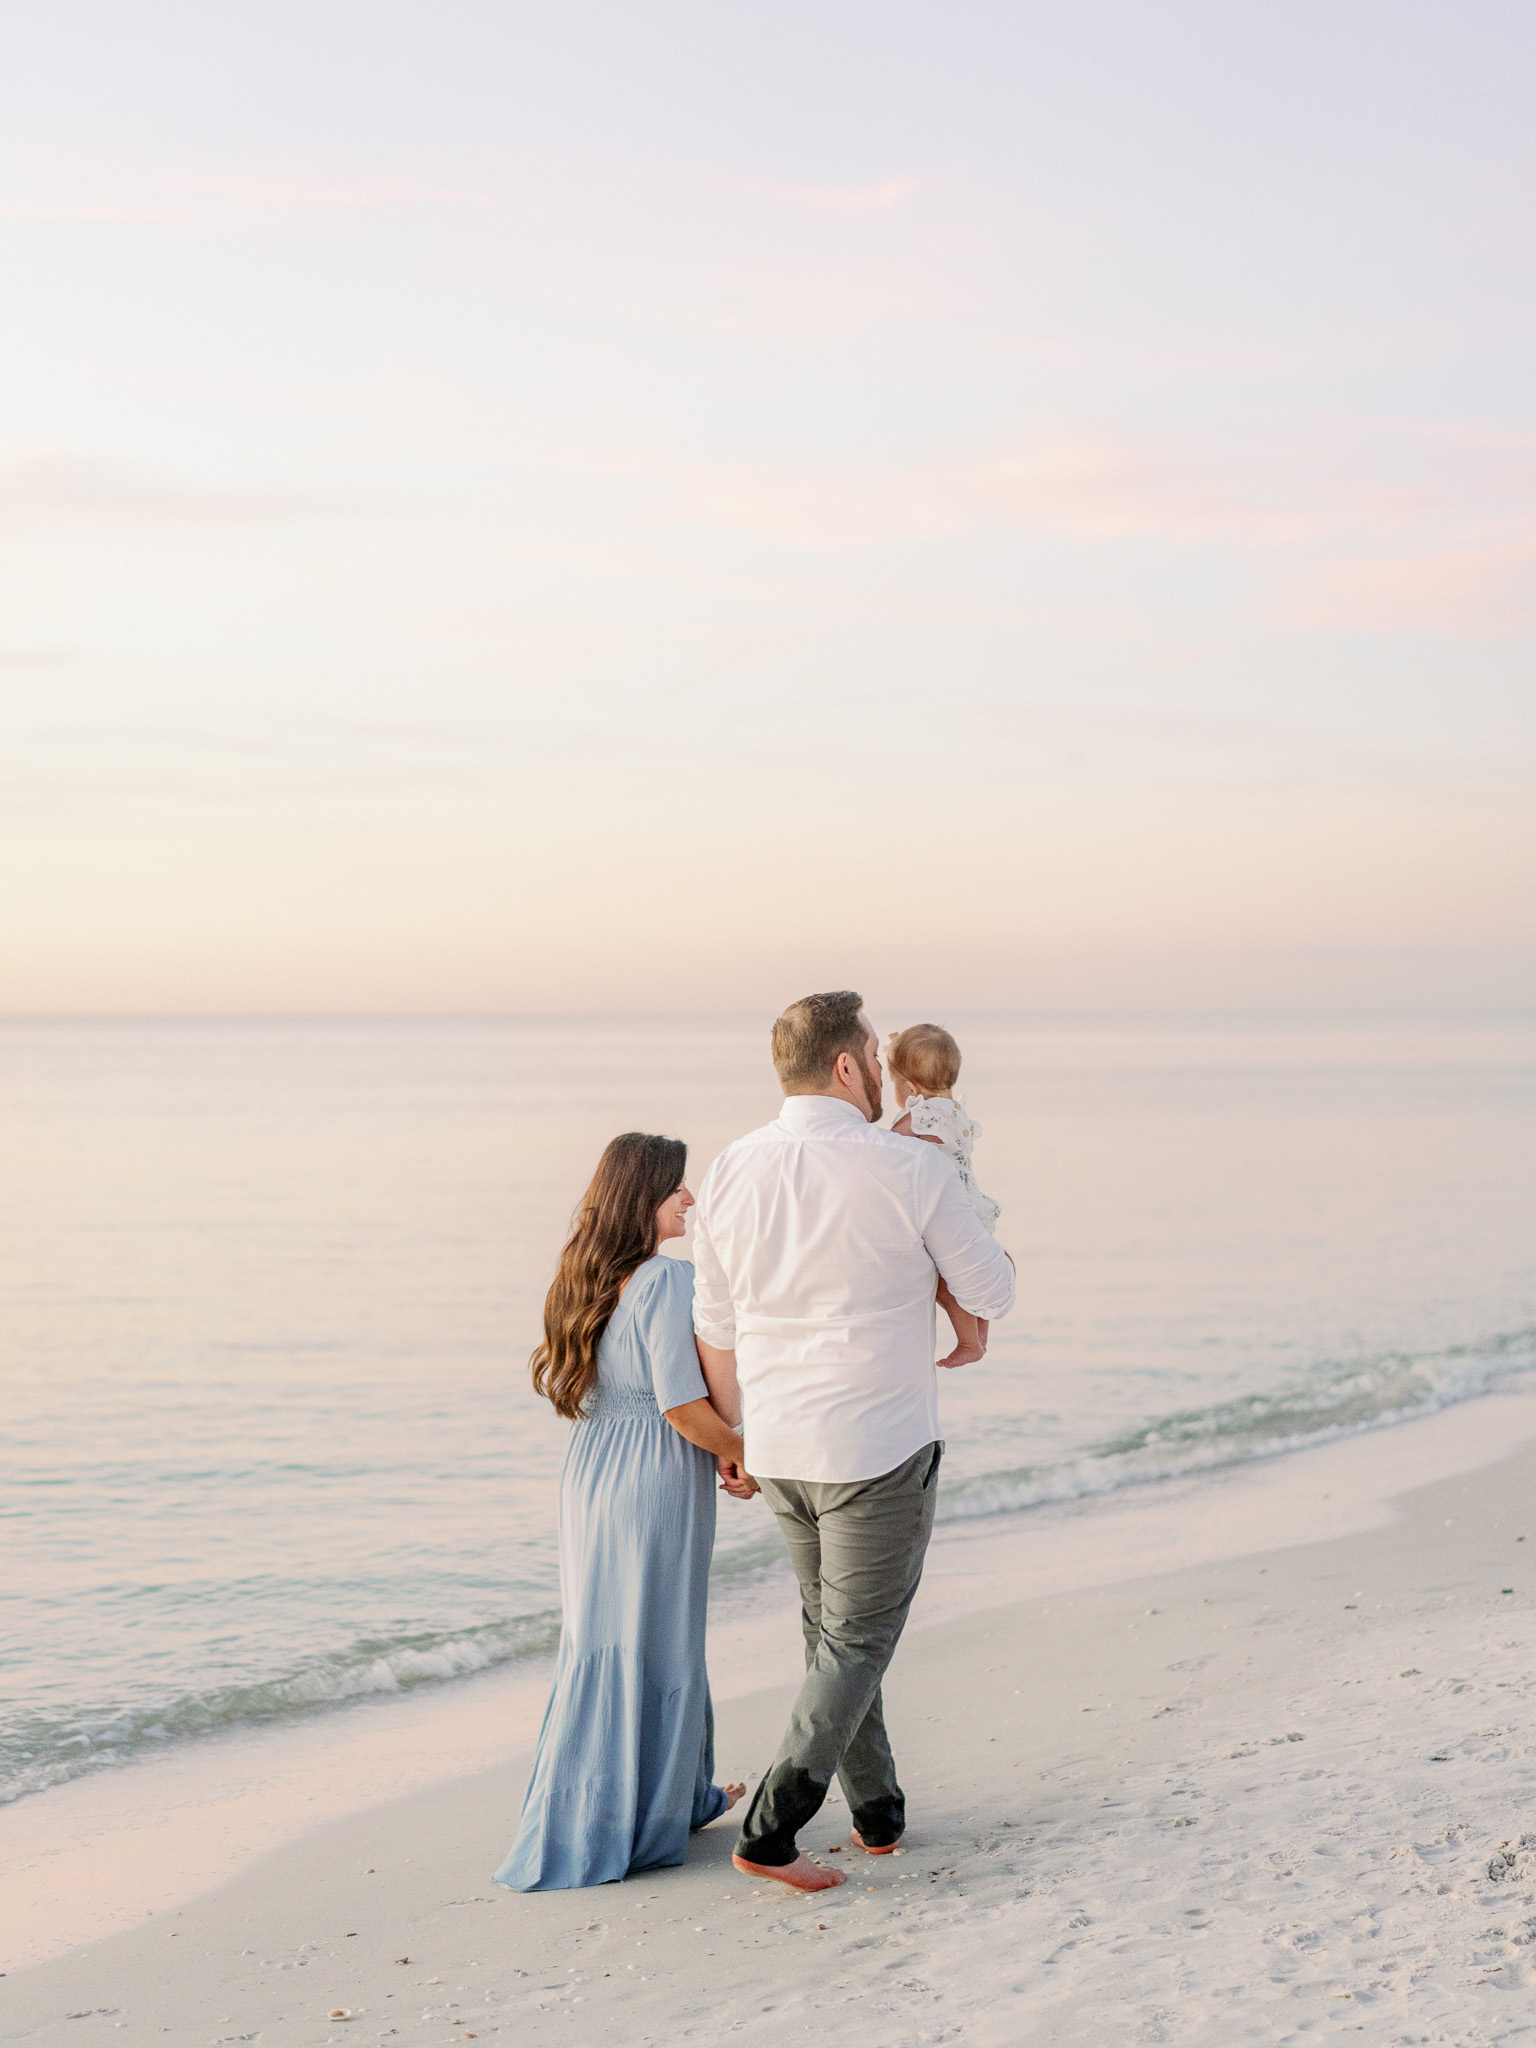 Lifestyle South Florida Family Photographer - Beach Family Session